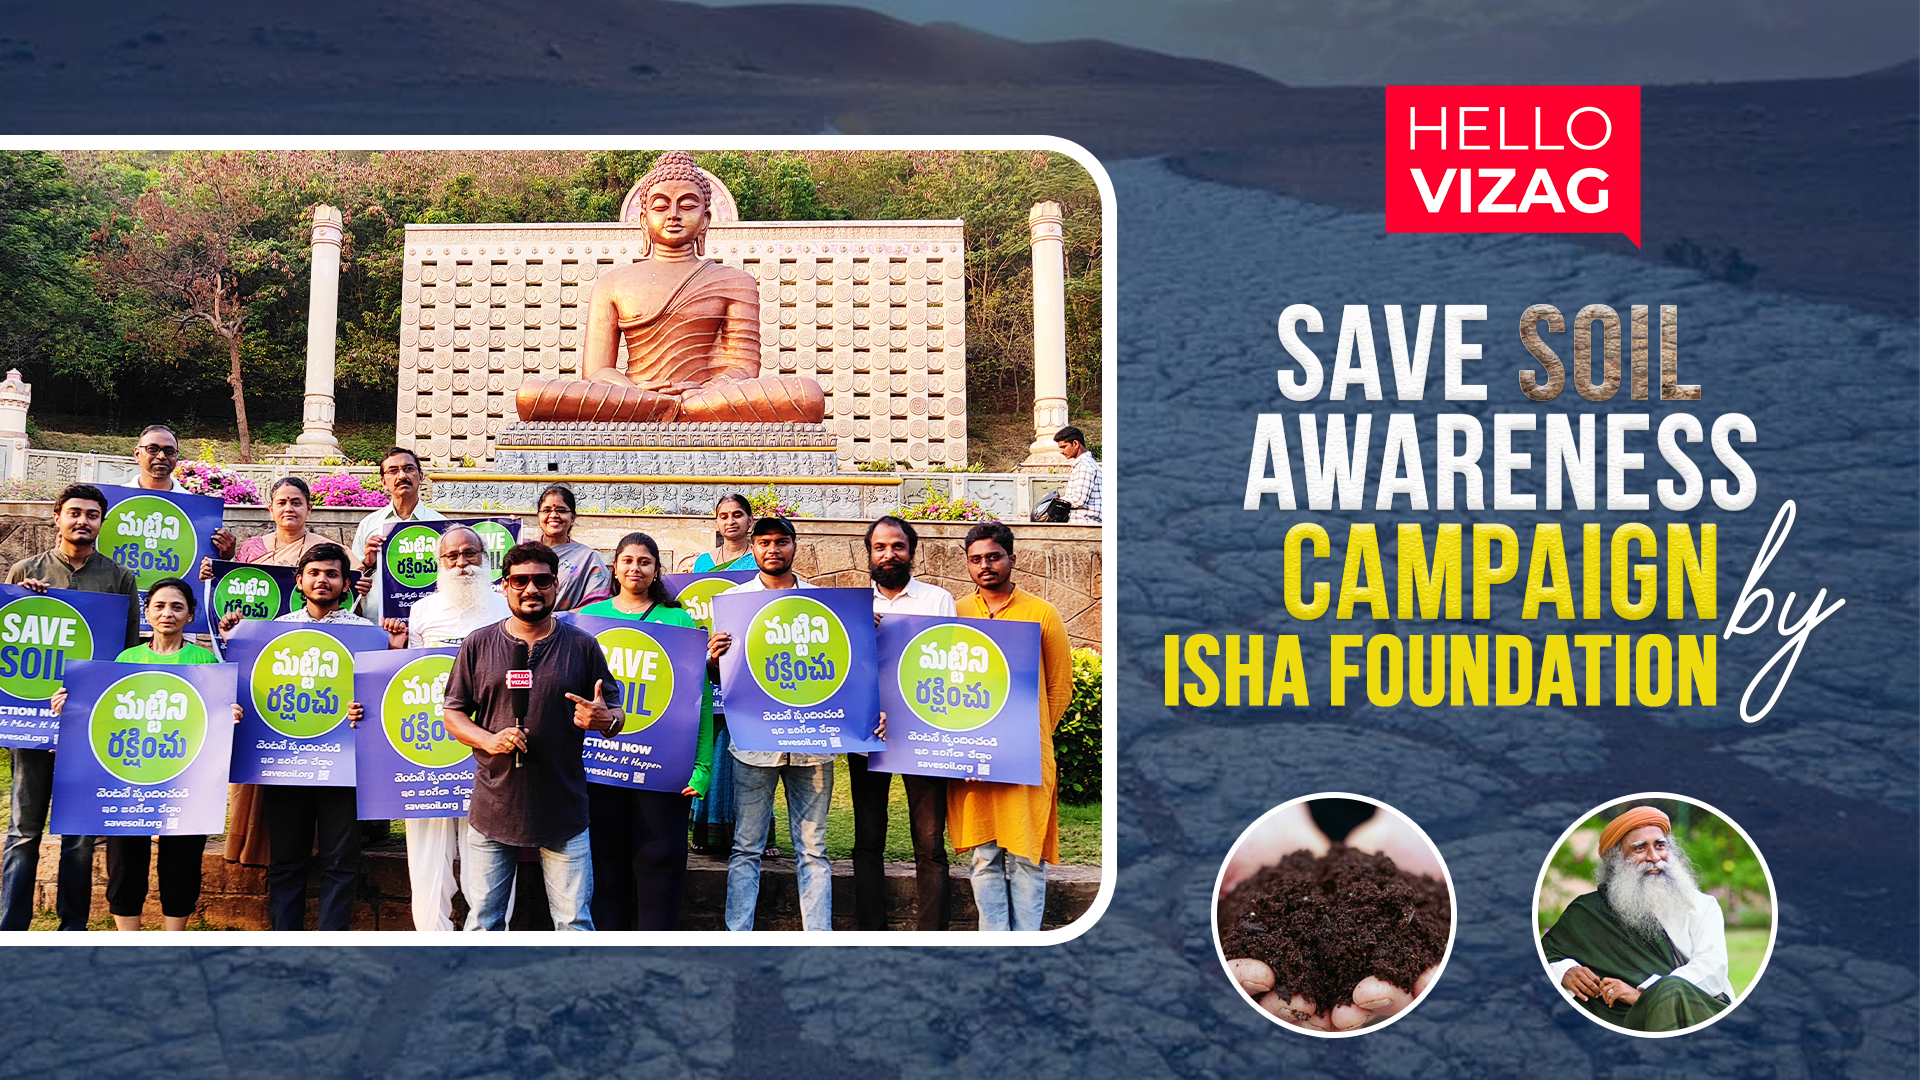 Save Soil Awareness campaign by Vizag Isha Foundation volunteers || Sadhguru